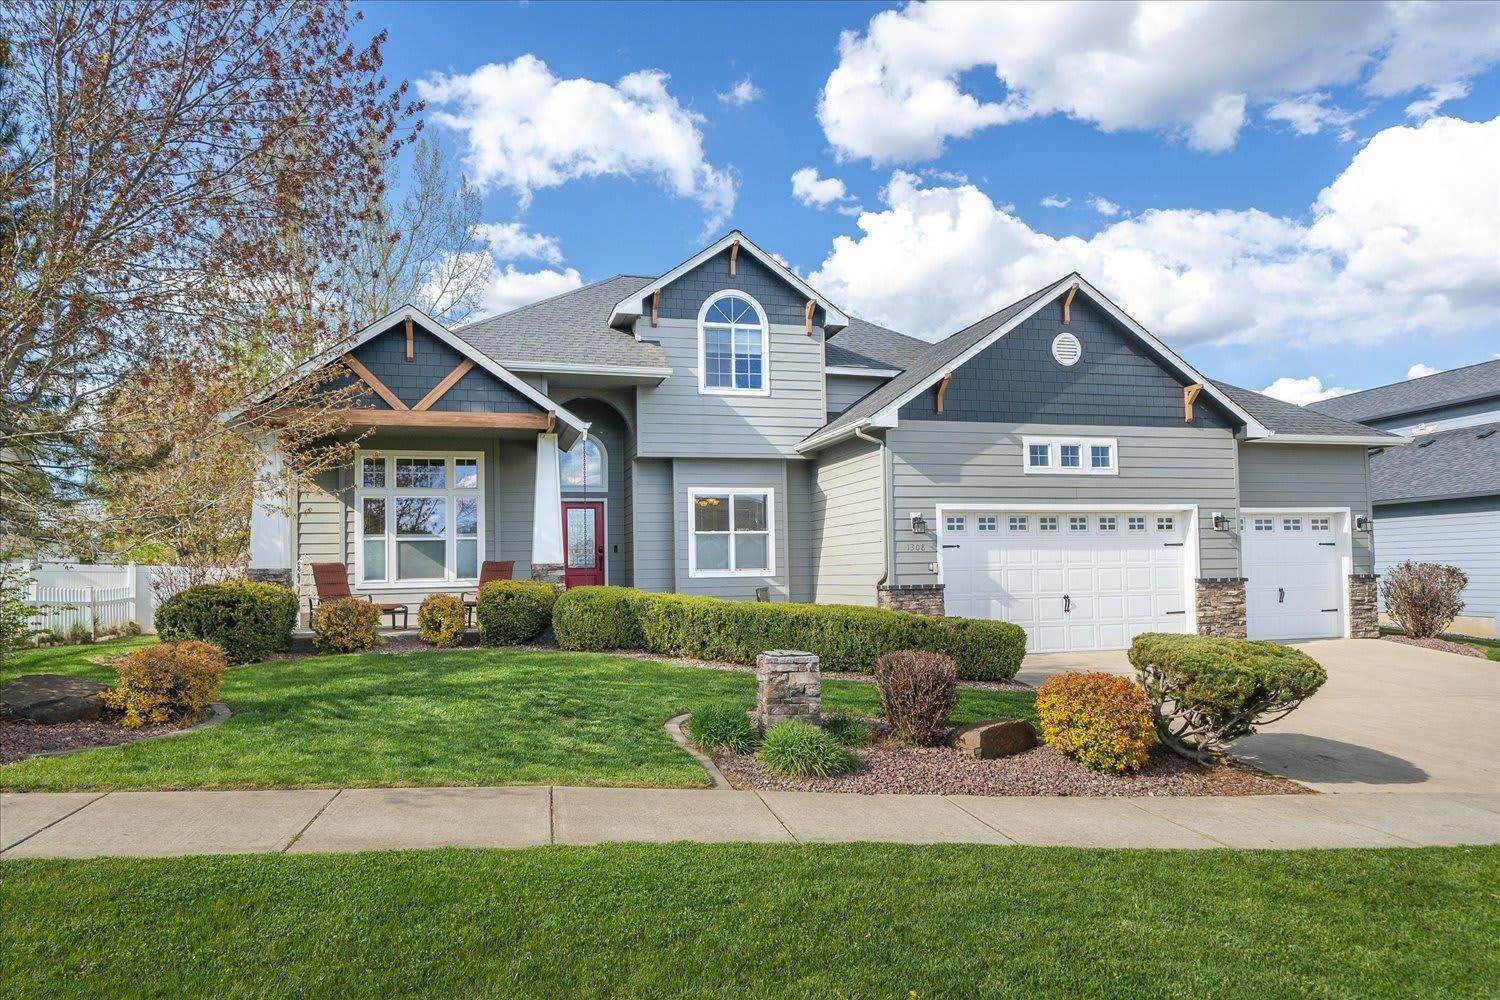 2. Single Family Homes for Sale at 1308 W Chaucer Avenue Spokane, Washington 99208 United States